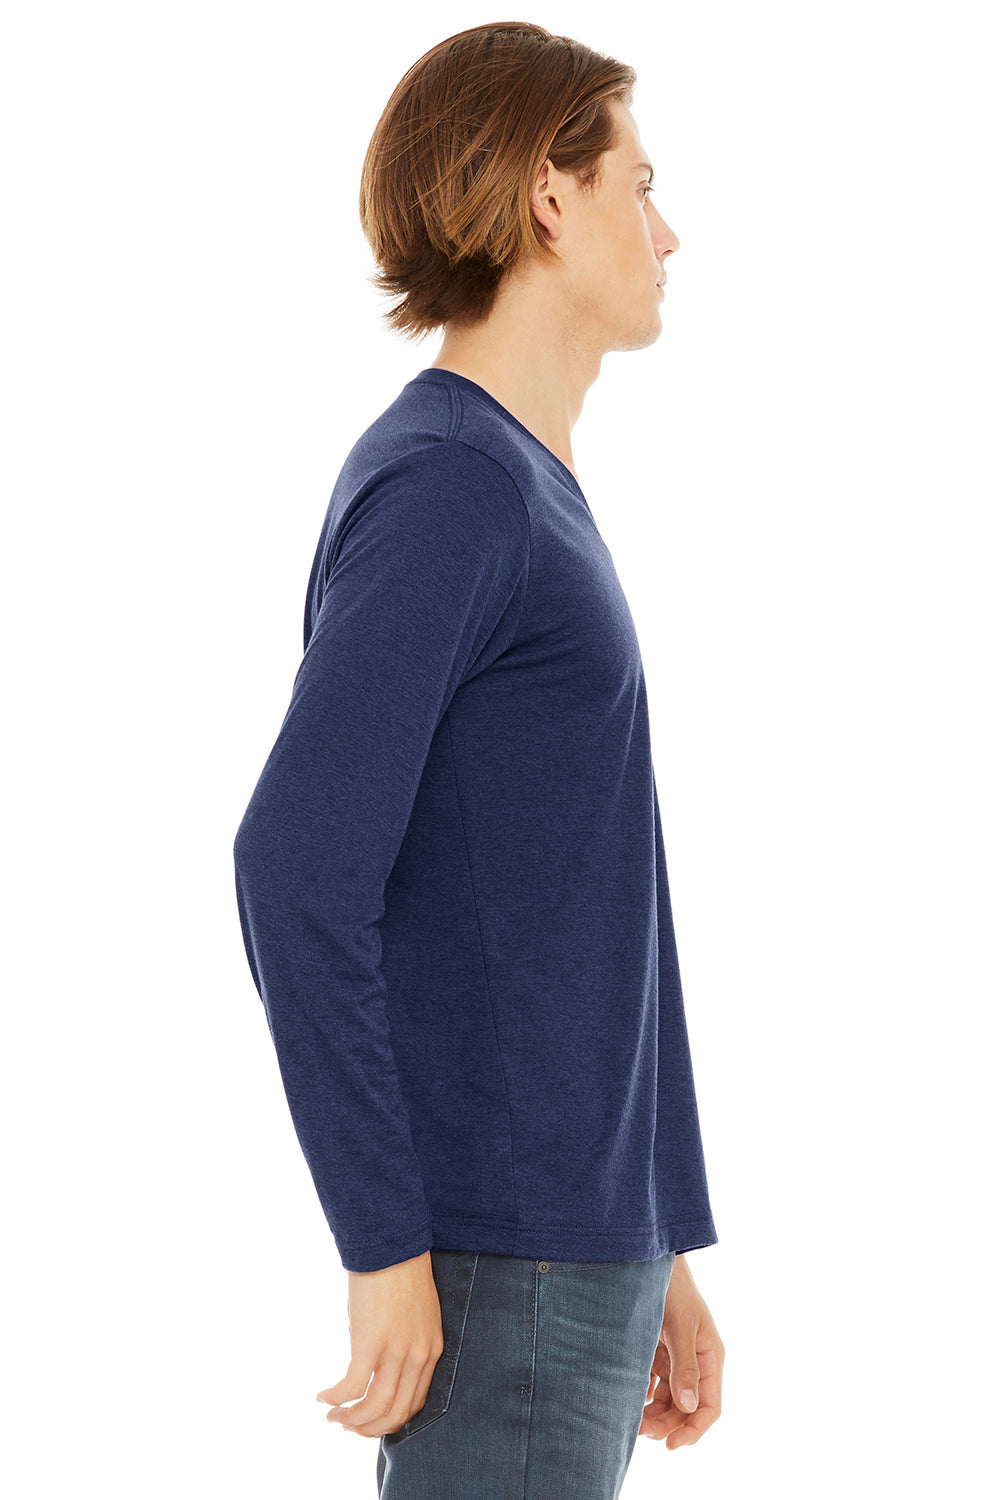 Bella + Canvas 3425 Mens Jersey Long Sleeve V-Neck T-Shirt Navy Blue Model Side